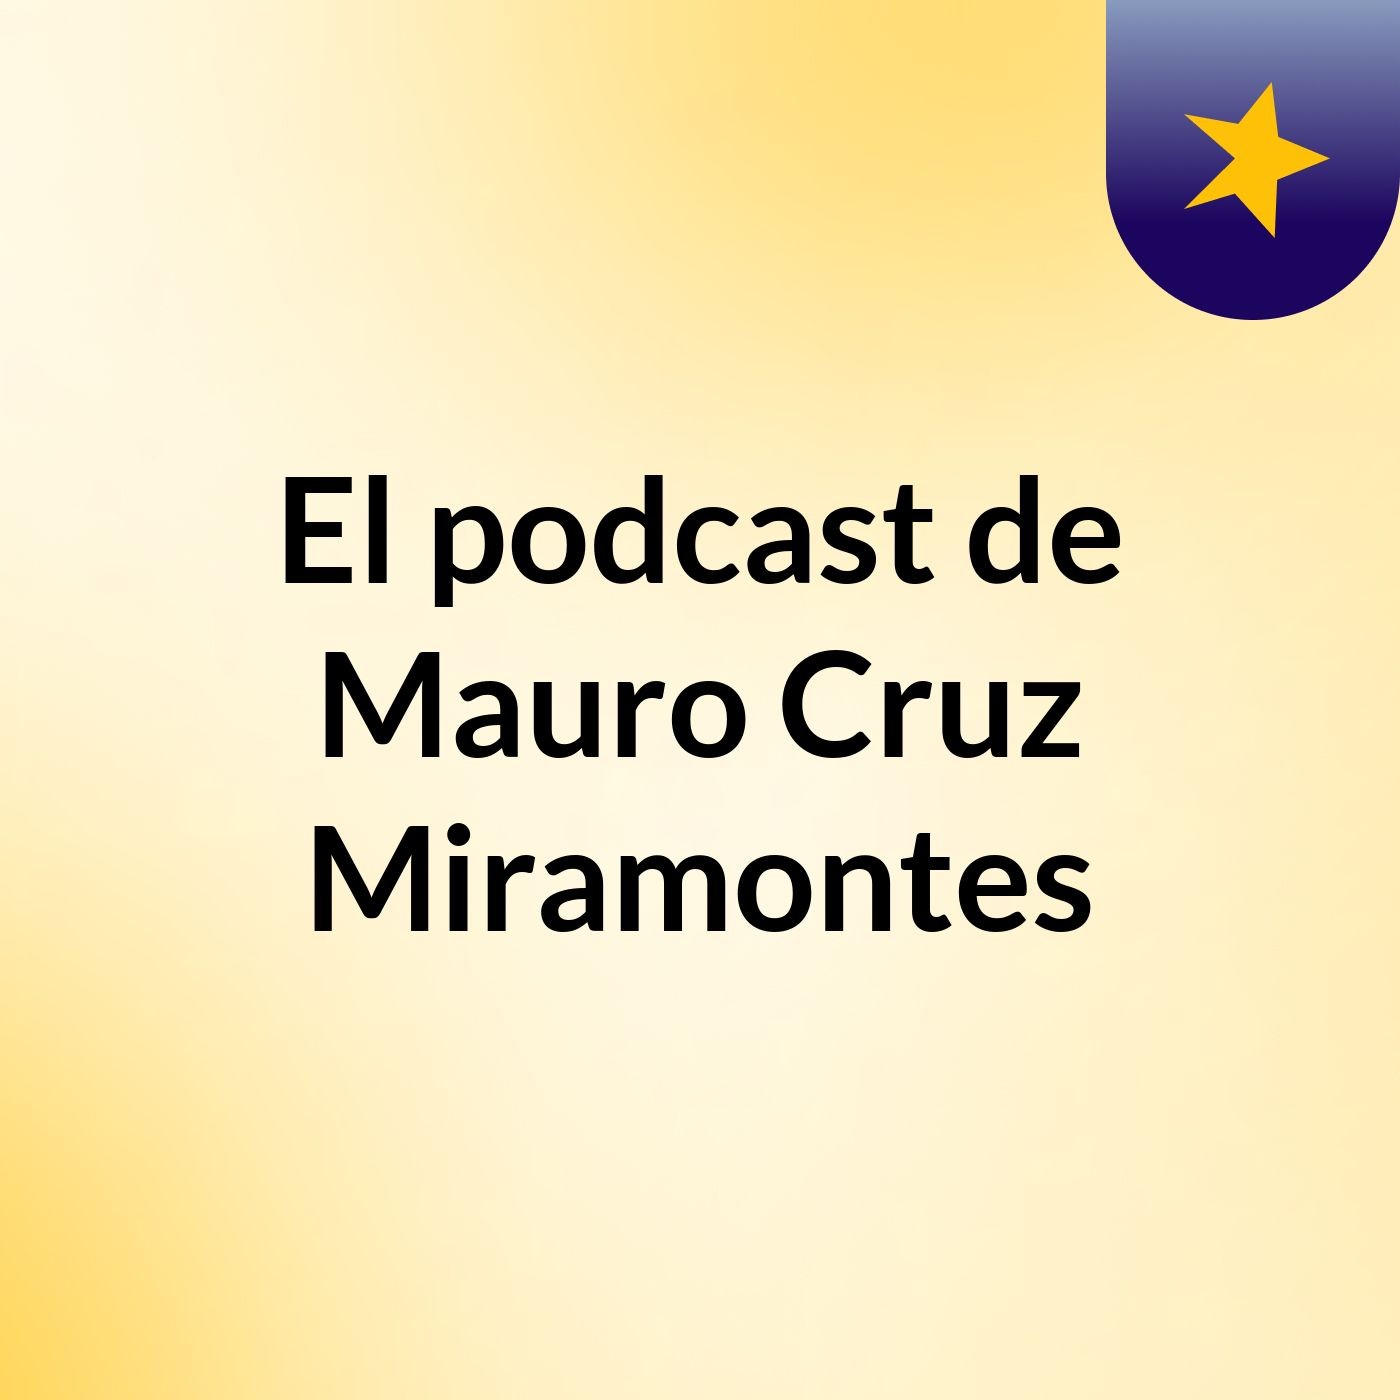 Episodio 11 - El podcast de Mauro Cruz Miramontes